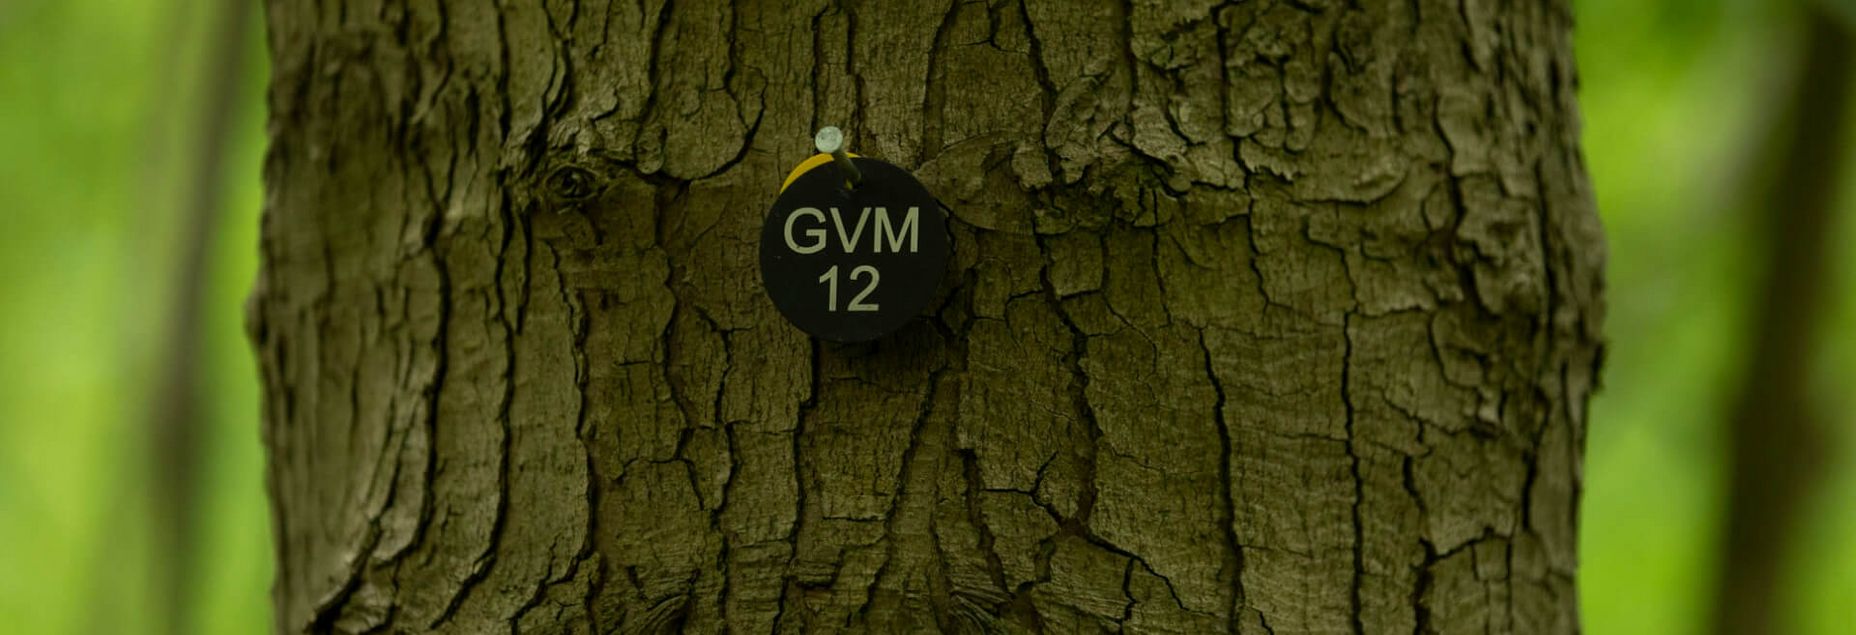 Baum GVM 12 - Plakette